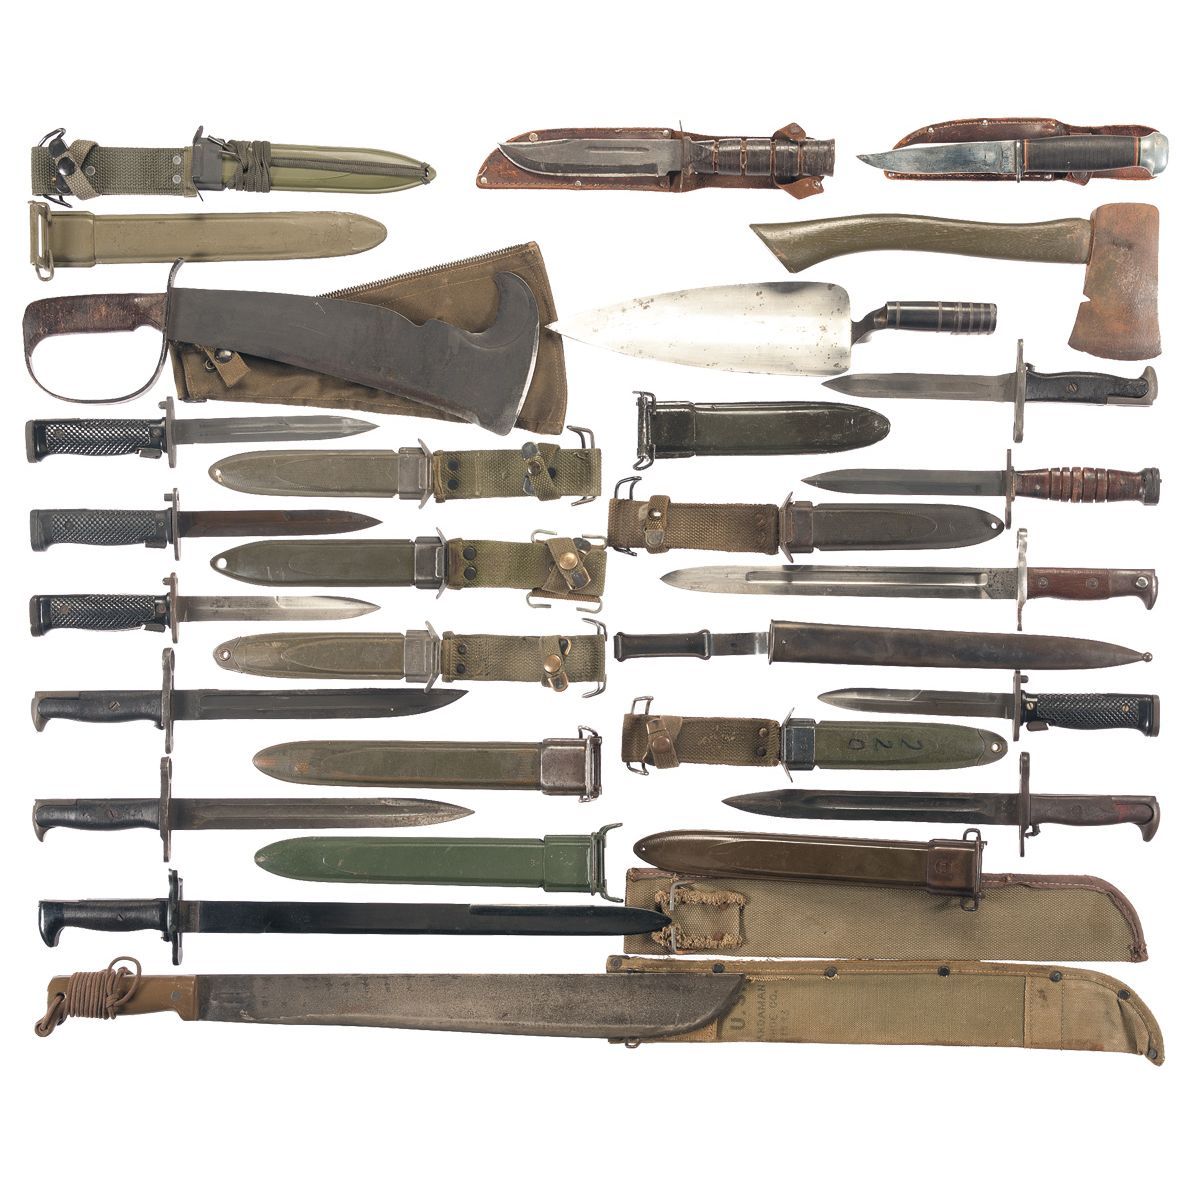 knives, machetes, axes and various blades